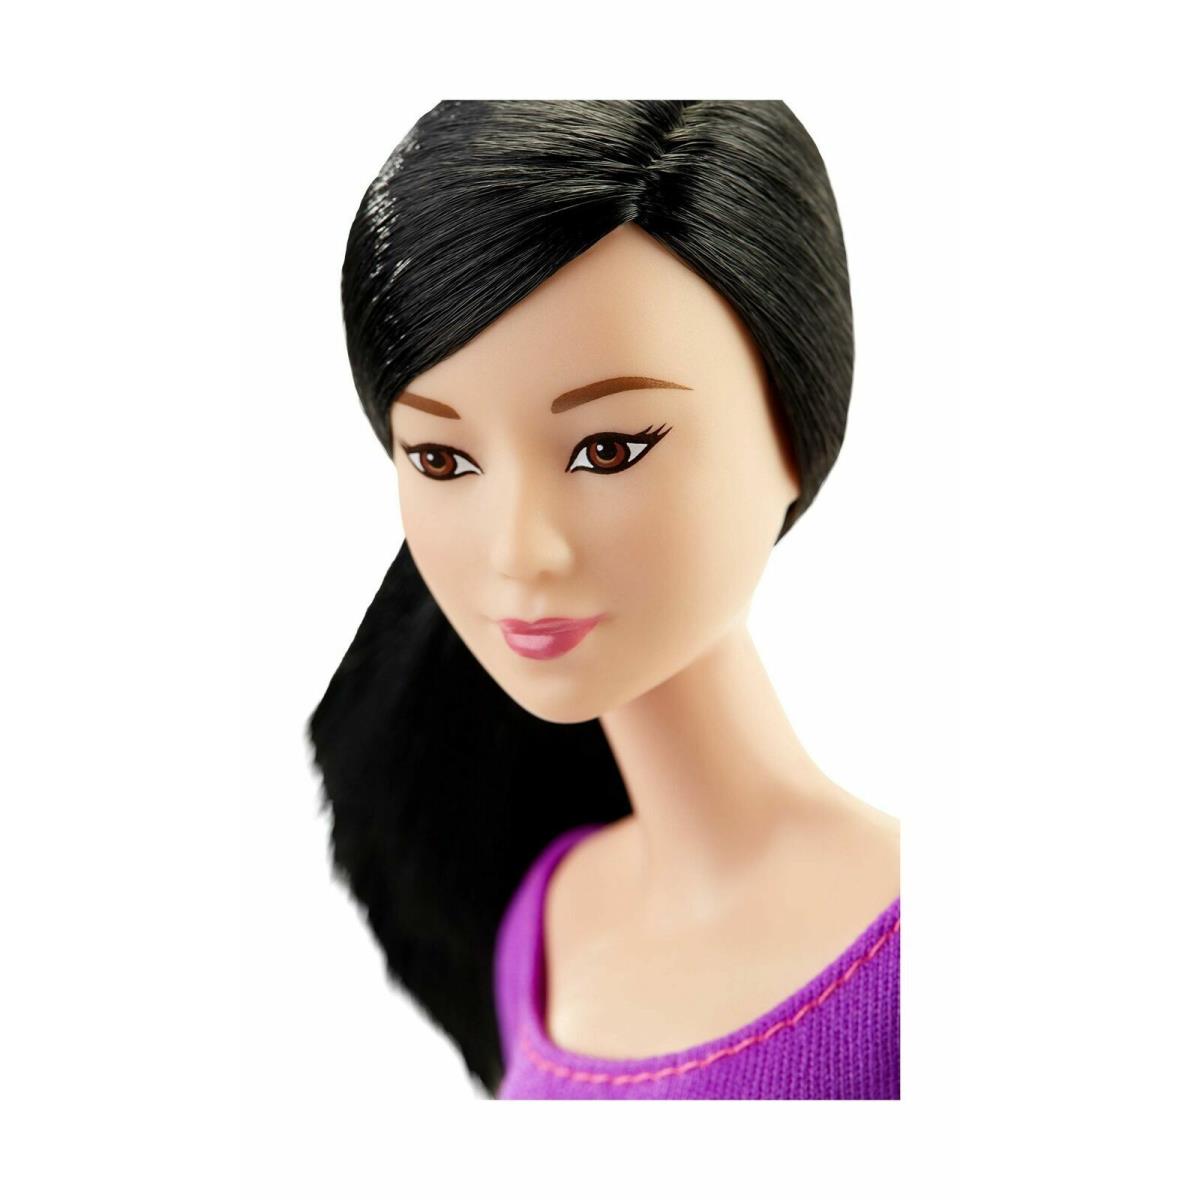 Barbie toy  - Black Doll Hair